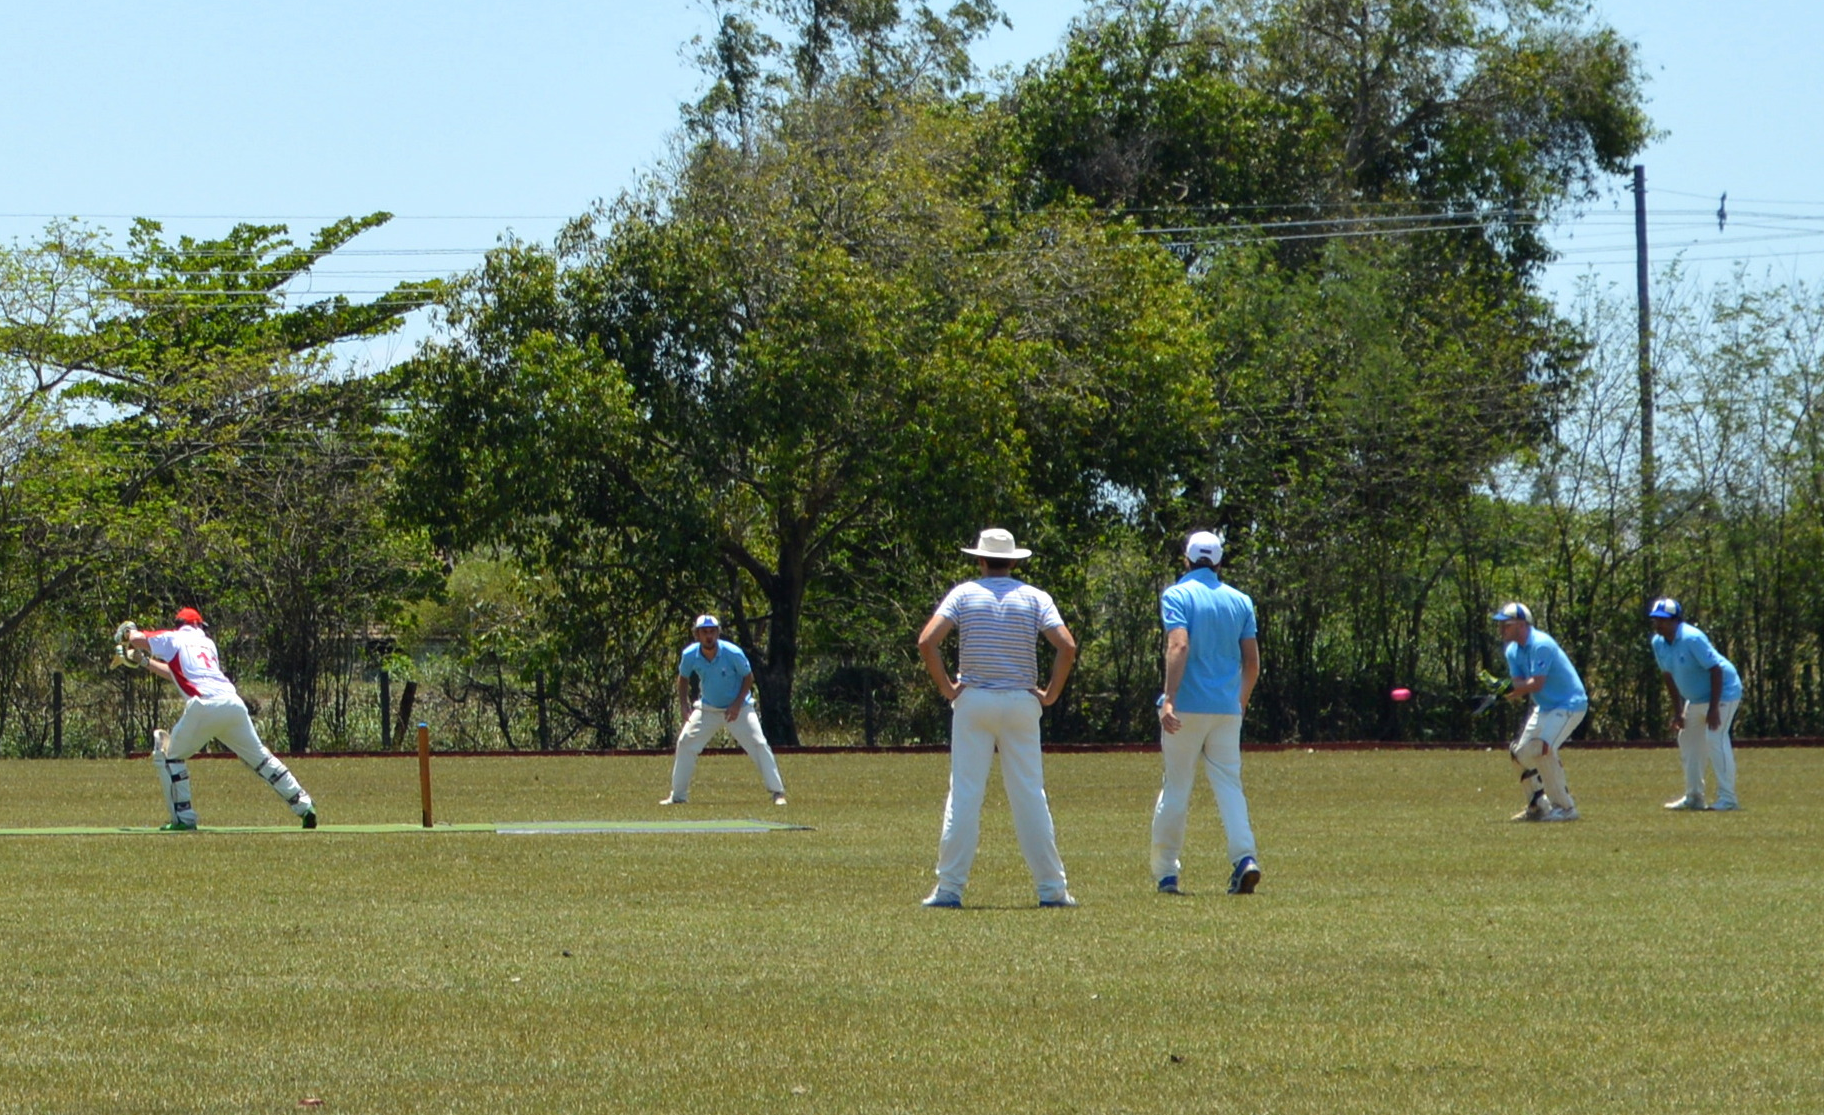 Carioca Cricket Club Plays on Saturday, April 4th: Sponsored